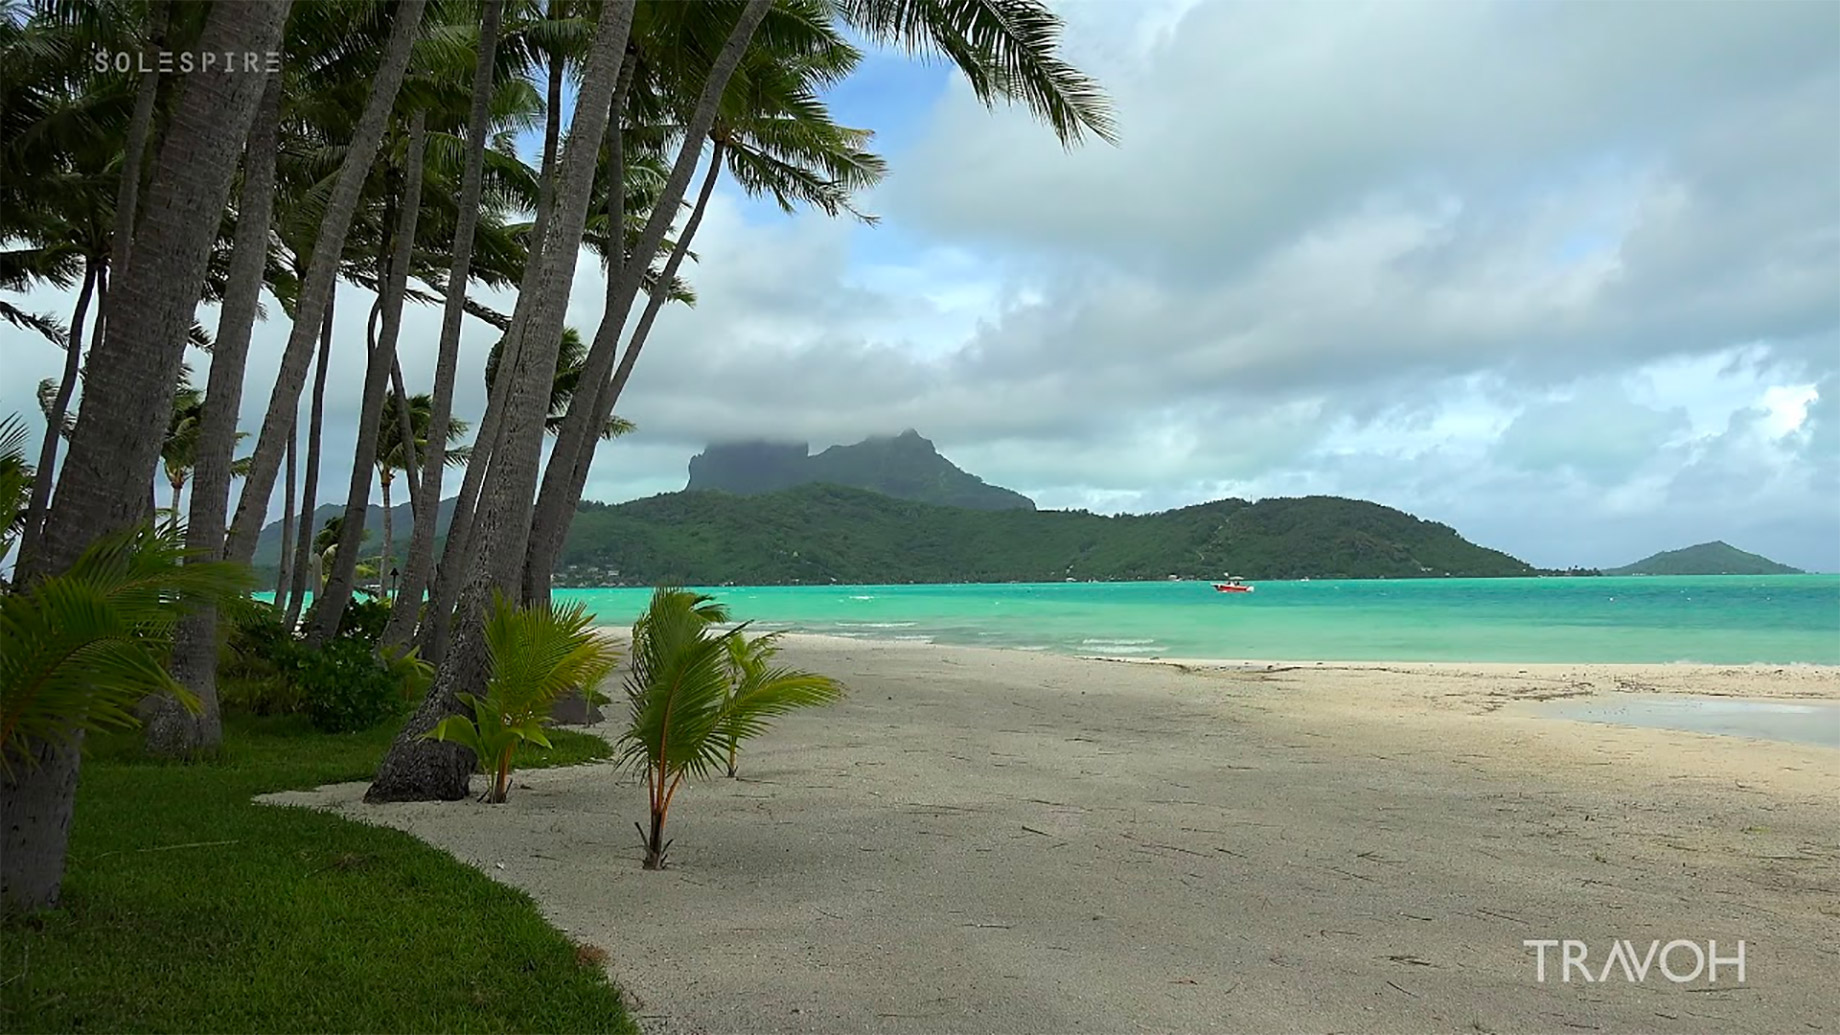 Music Timelapse - Tropical Windstorm - Motu Tane Island - Bora Bora, French Polynesia - 4K Travel Video